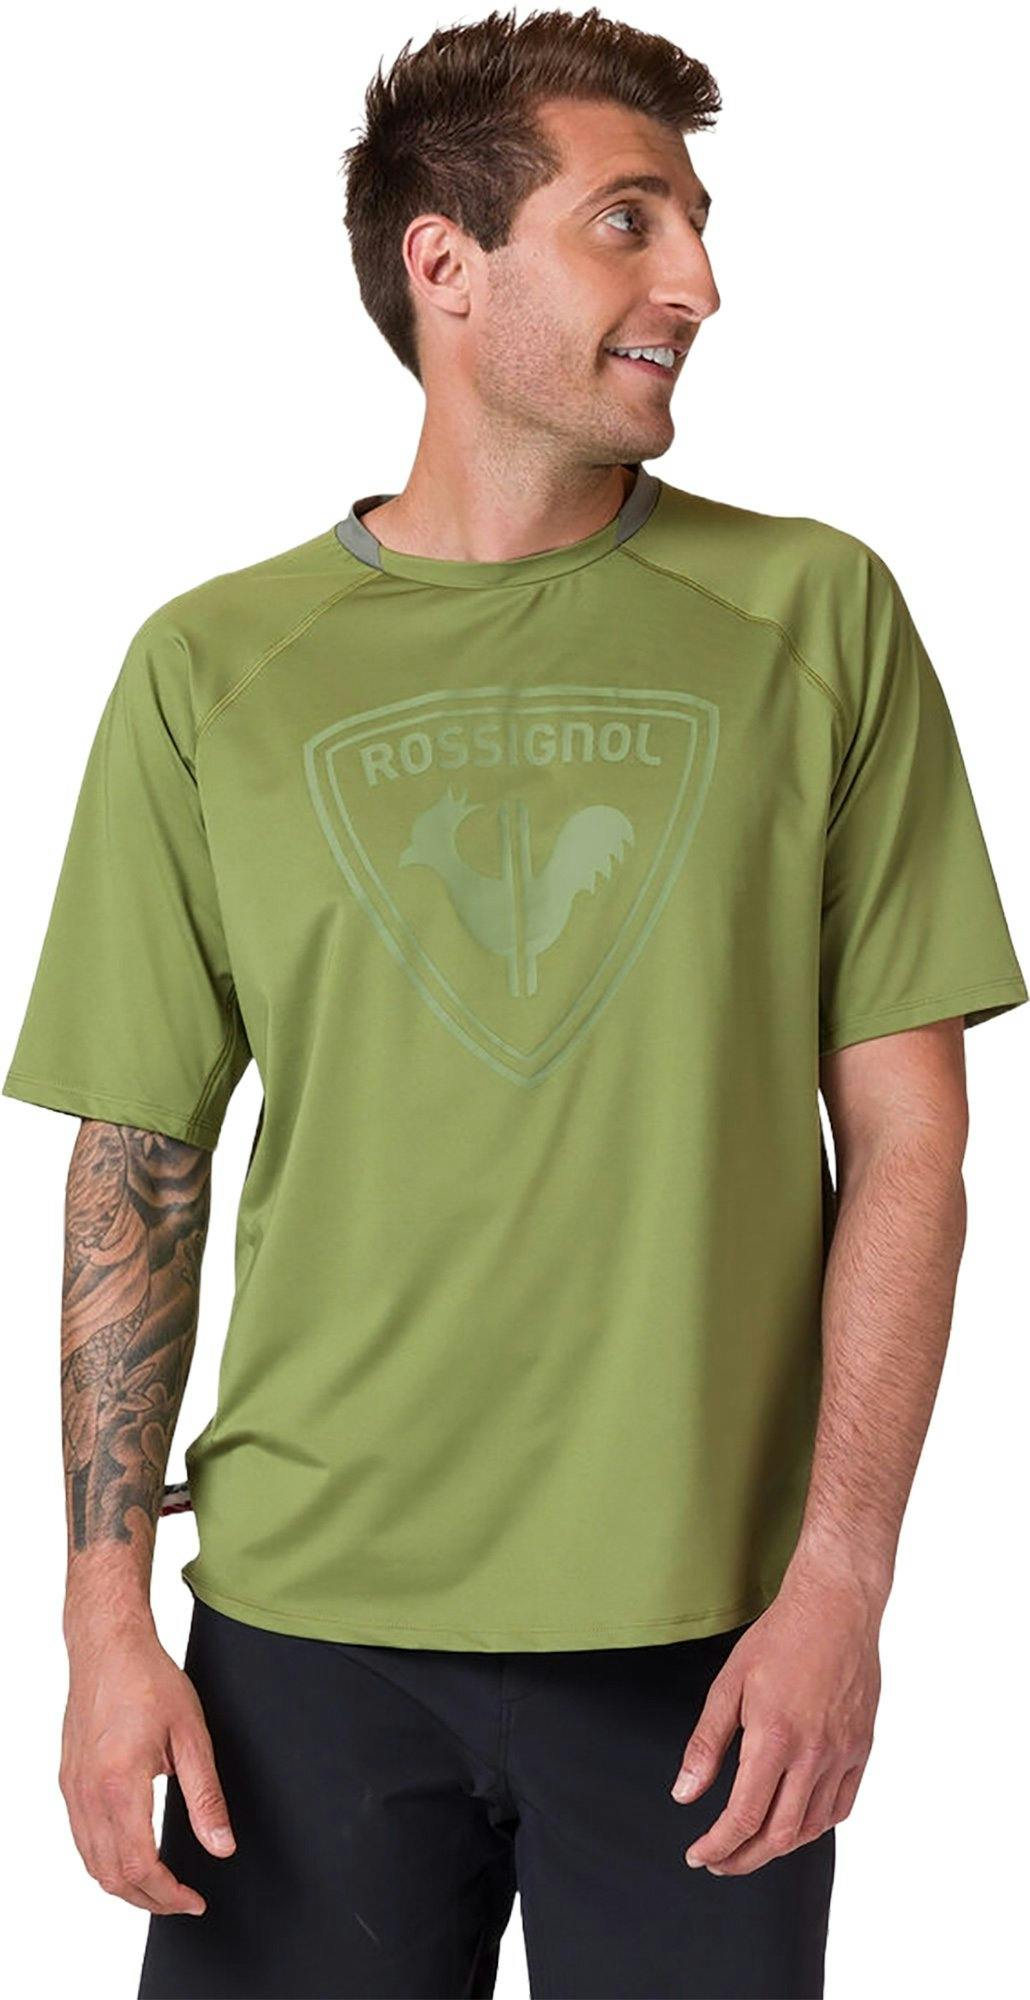 Product image for SKPR Short Sleeve Jersey - Men's